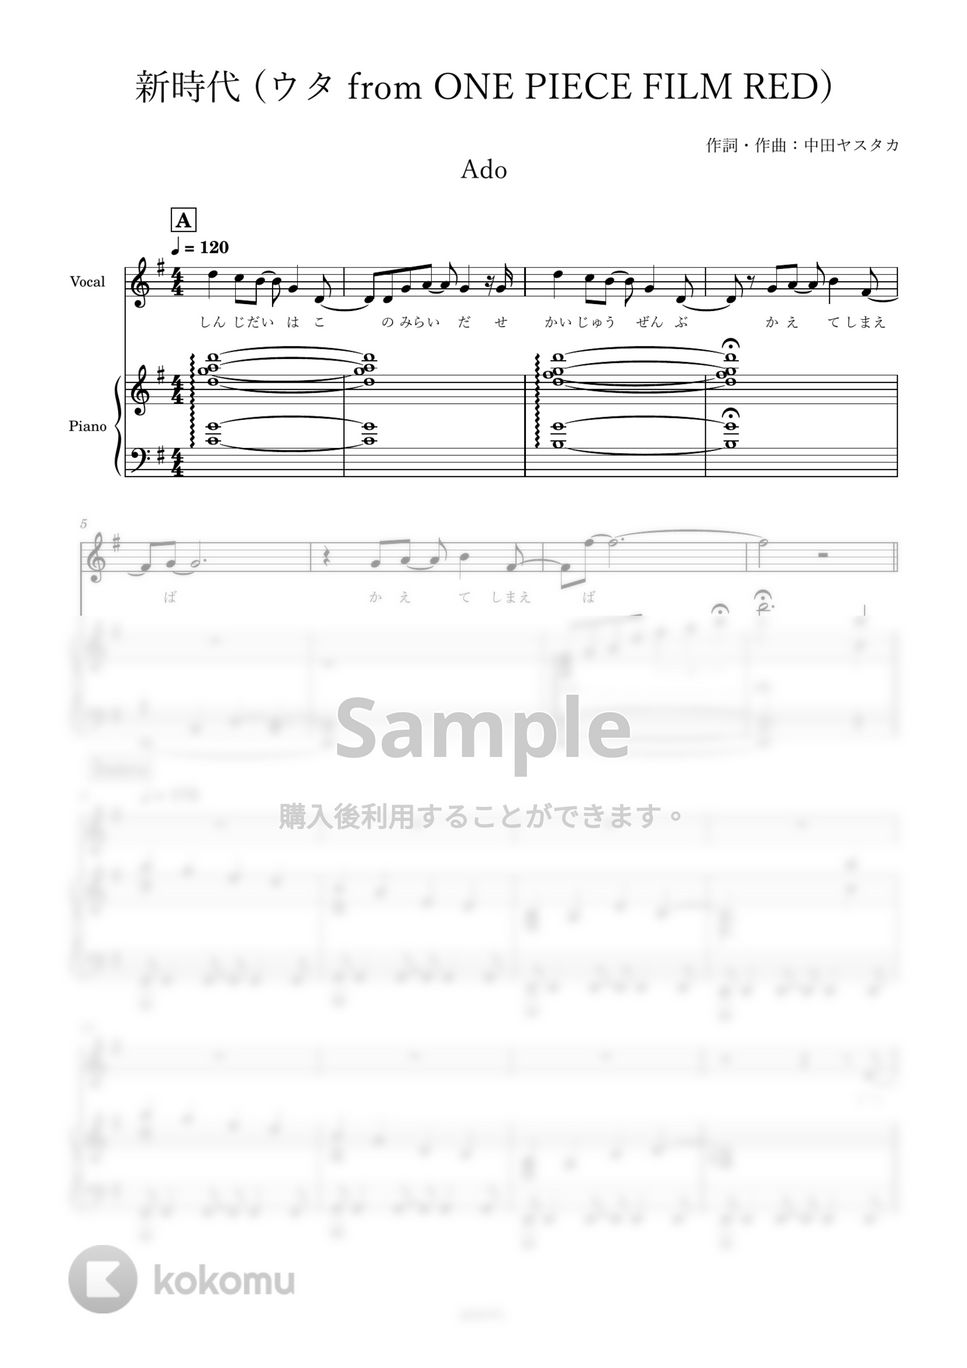 Ado - 新時代 (ピアノ伴奏) by poyori.